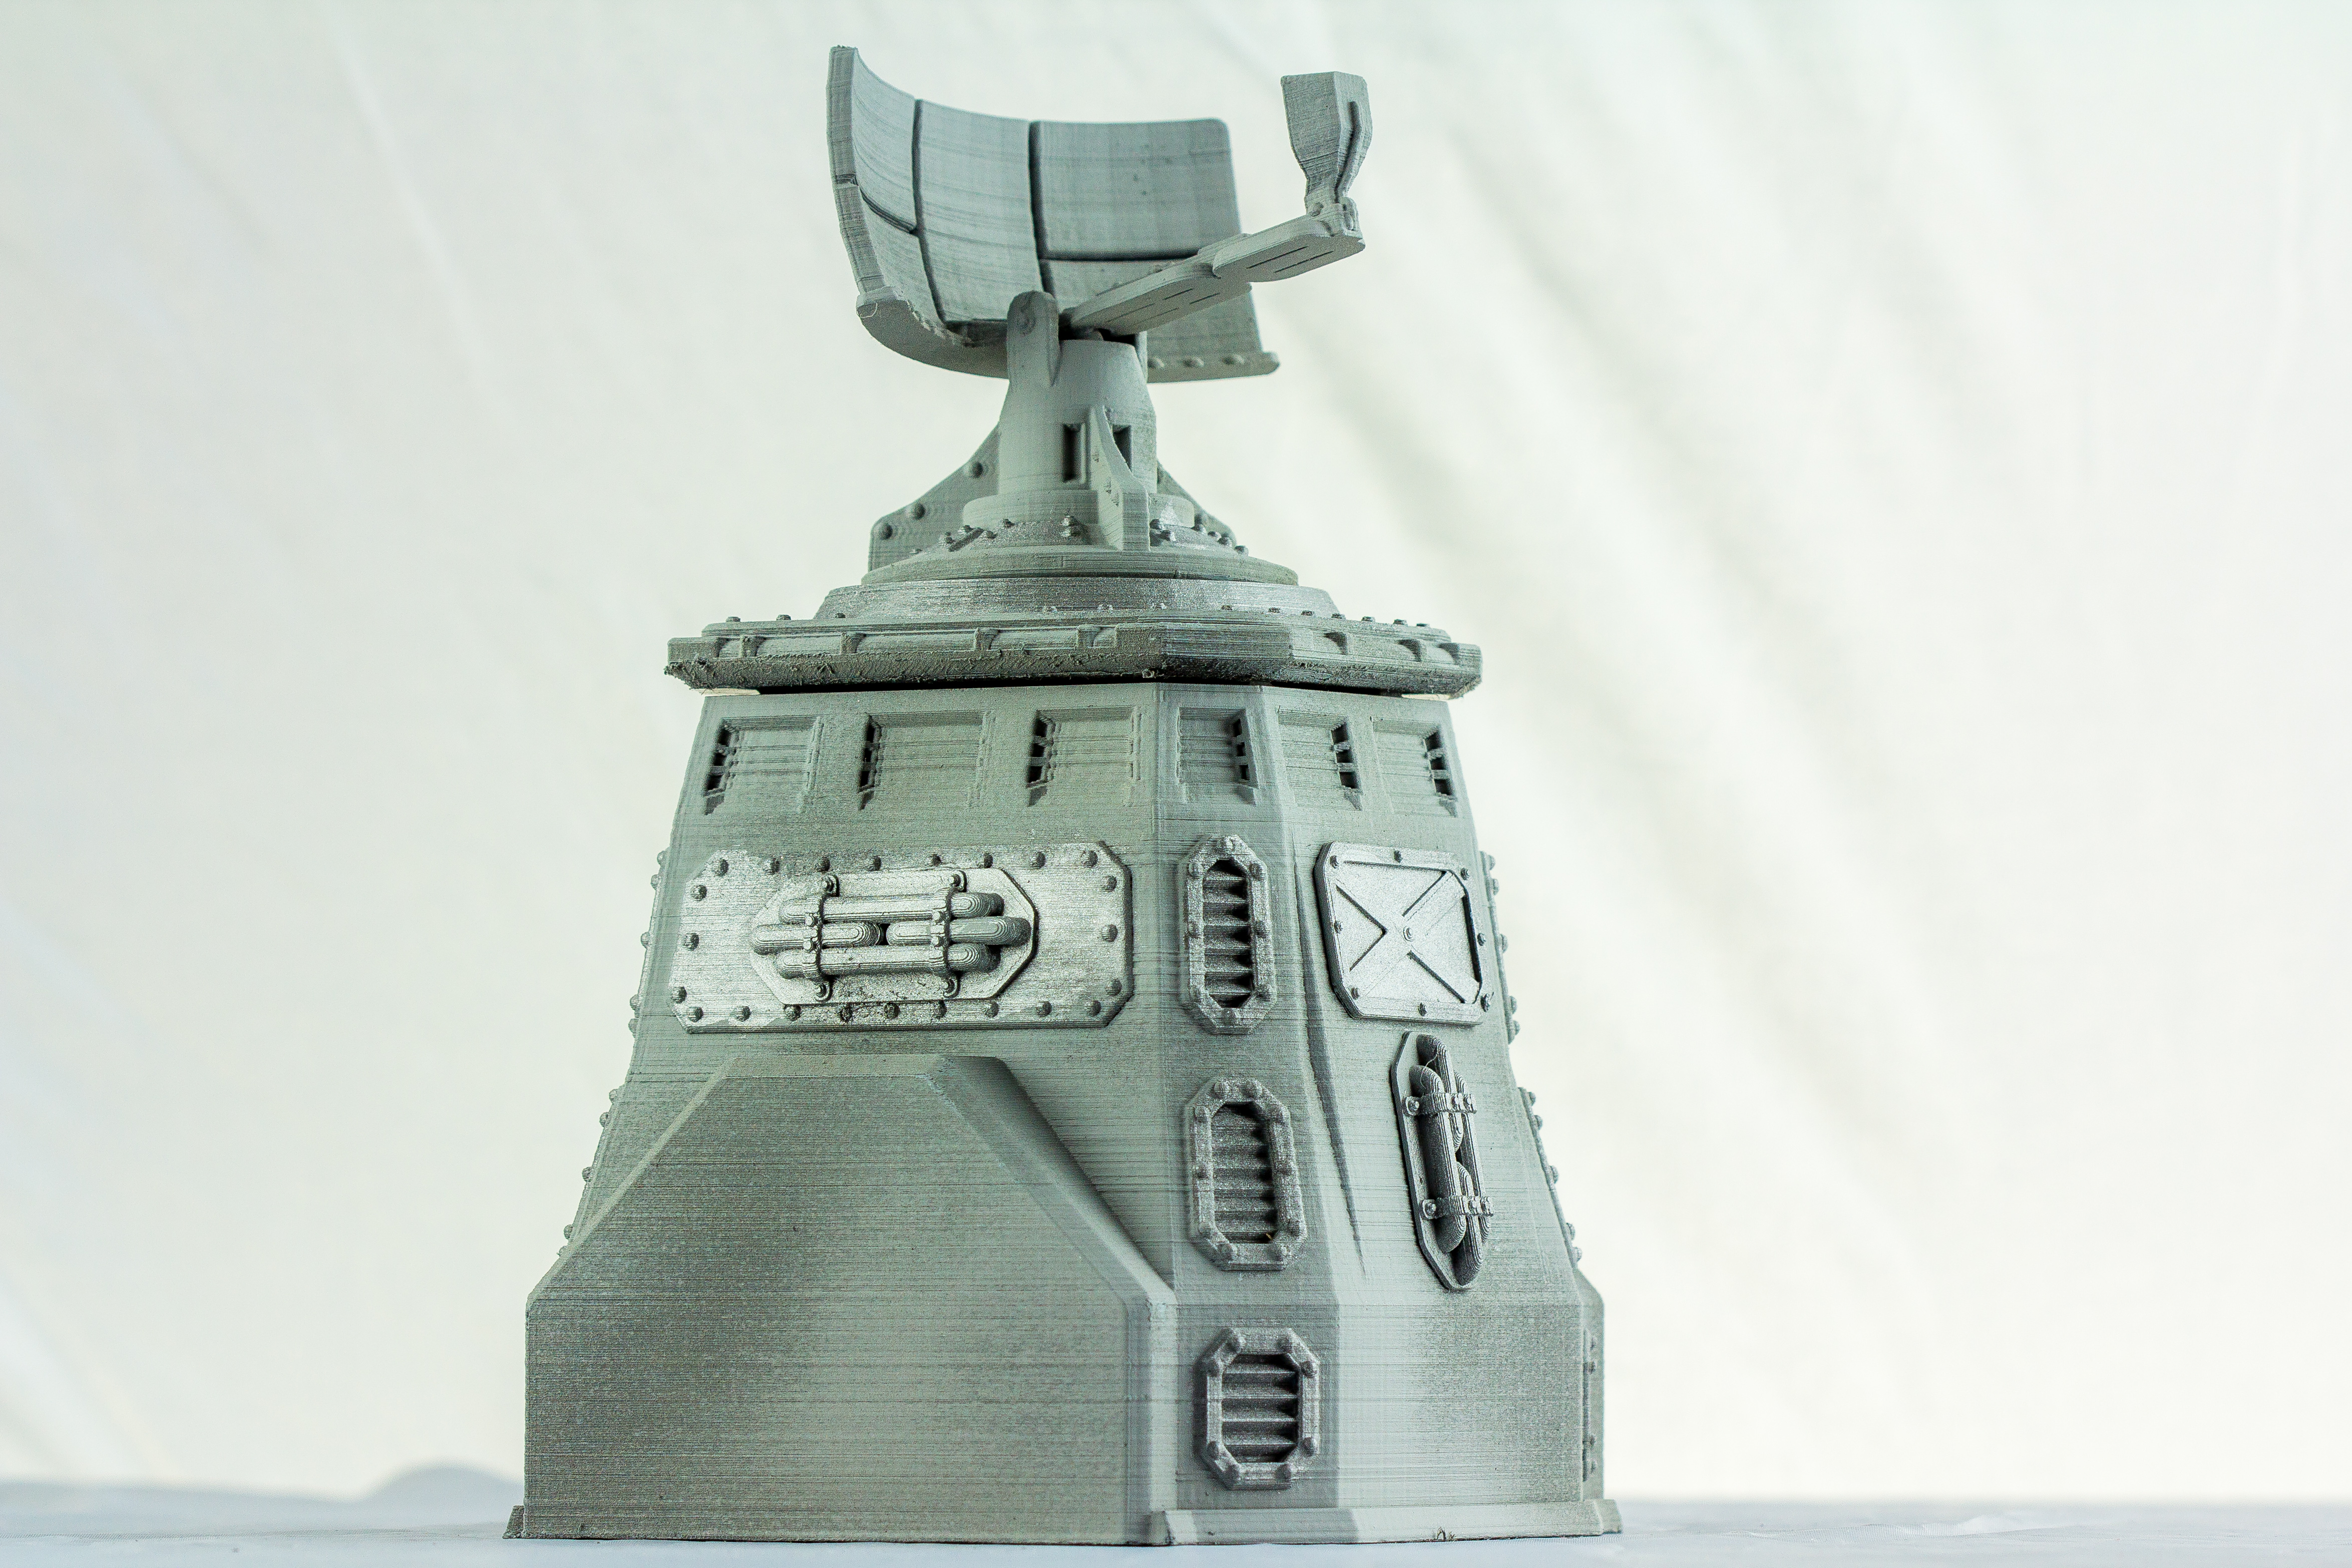 Terrain 4 Print: Sci-Fi armored Tower with radar dish